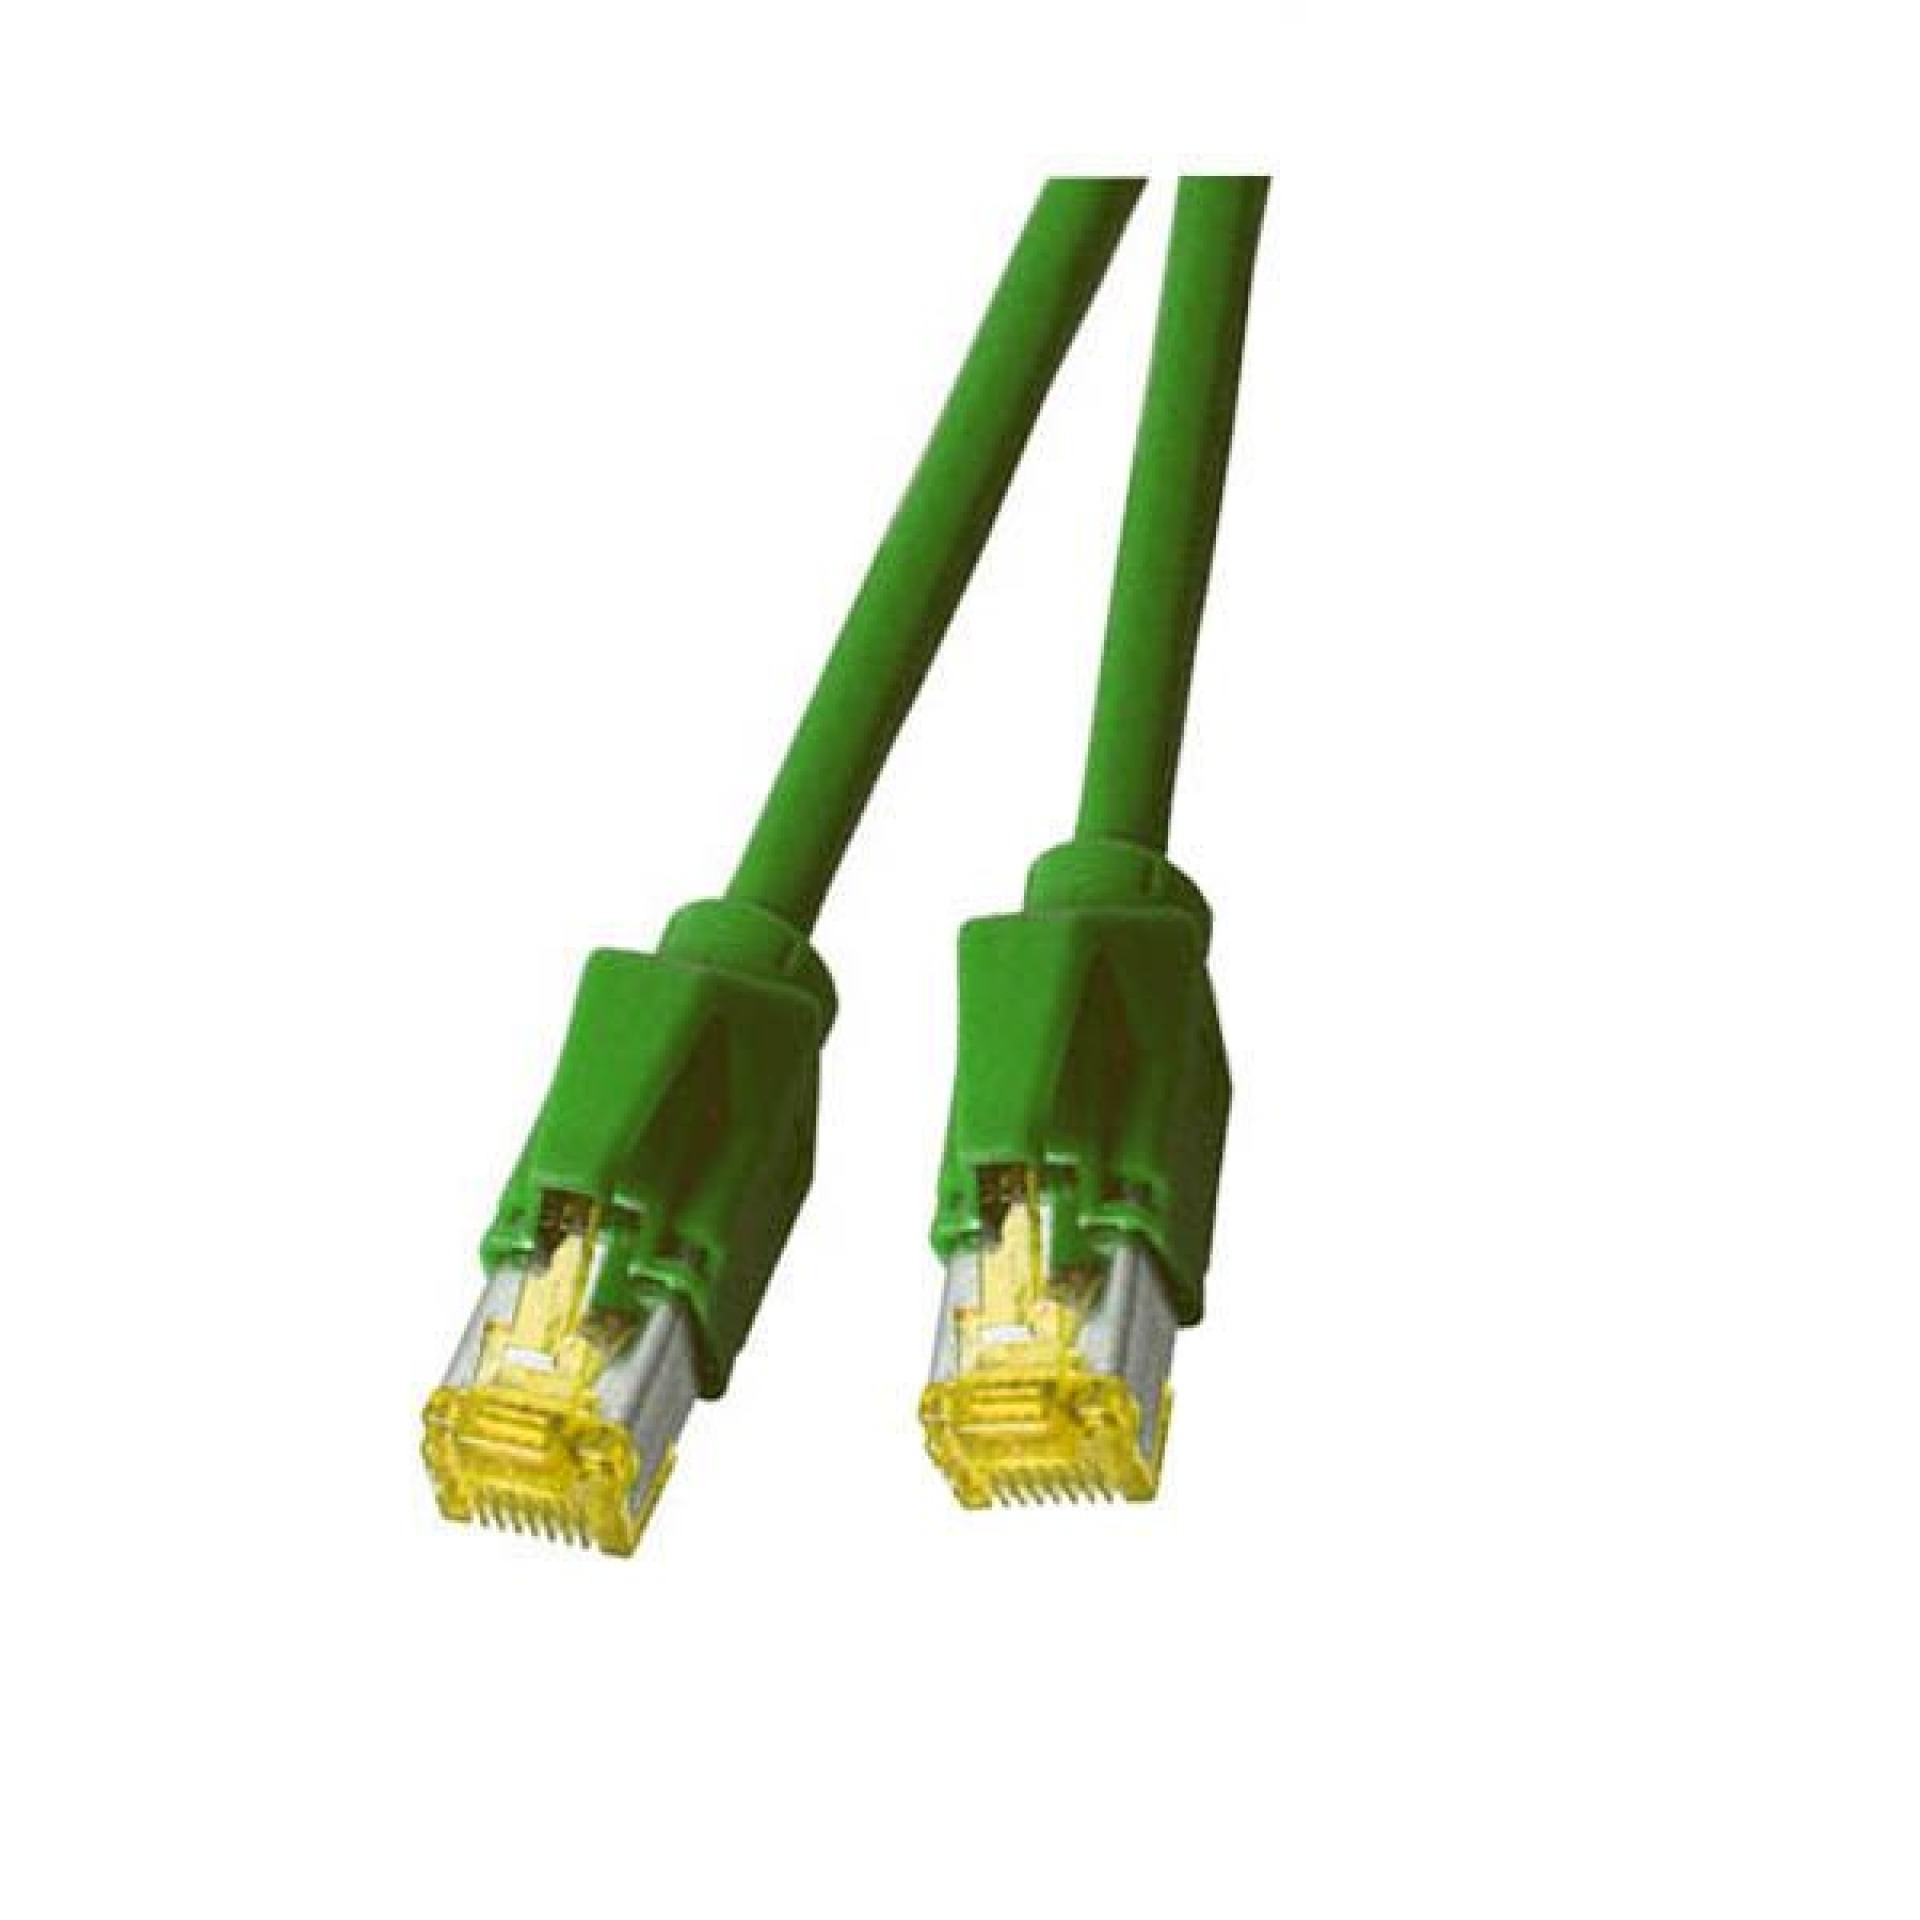 RJ45 Patch cable S/FTP, Cat.6A, TM31, Dätwyler 7702, 1m, green